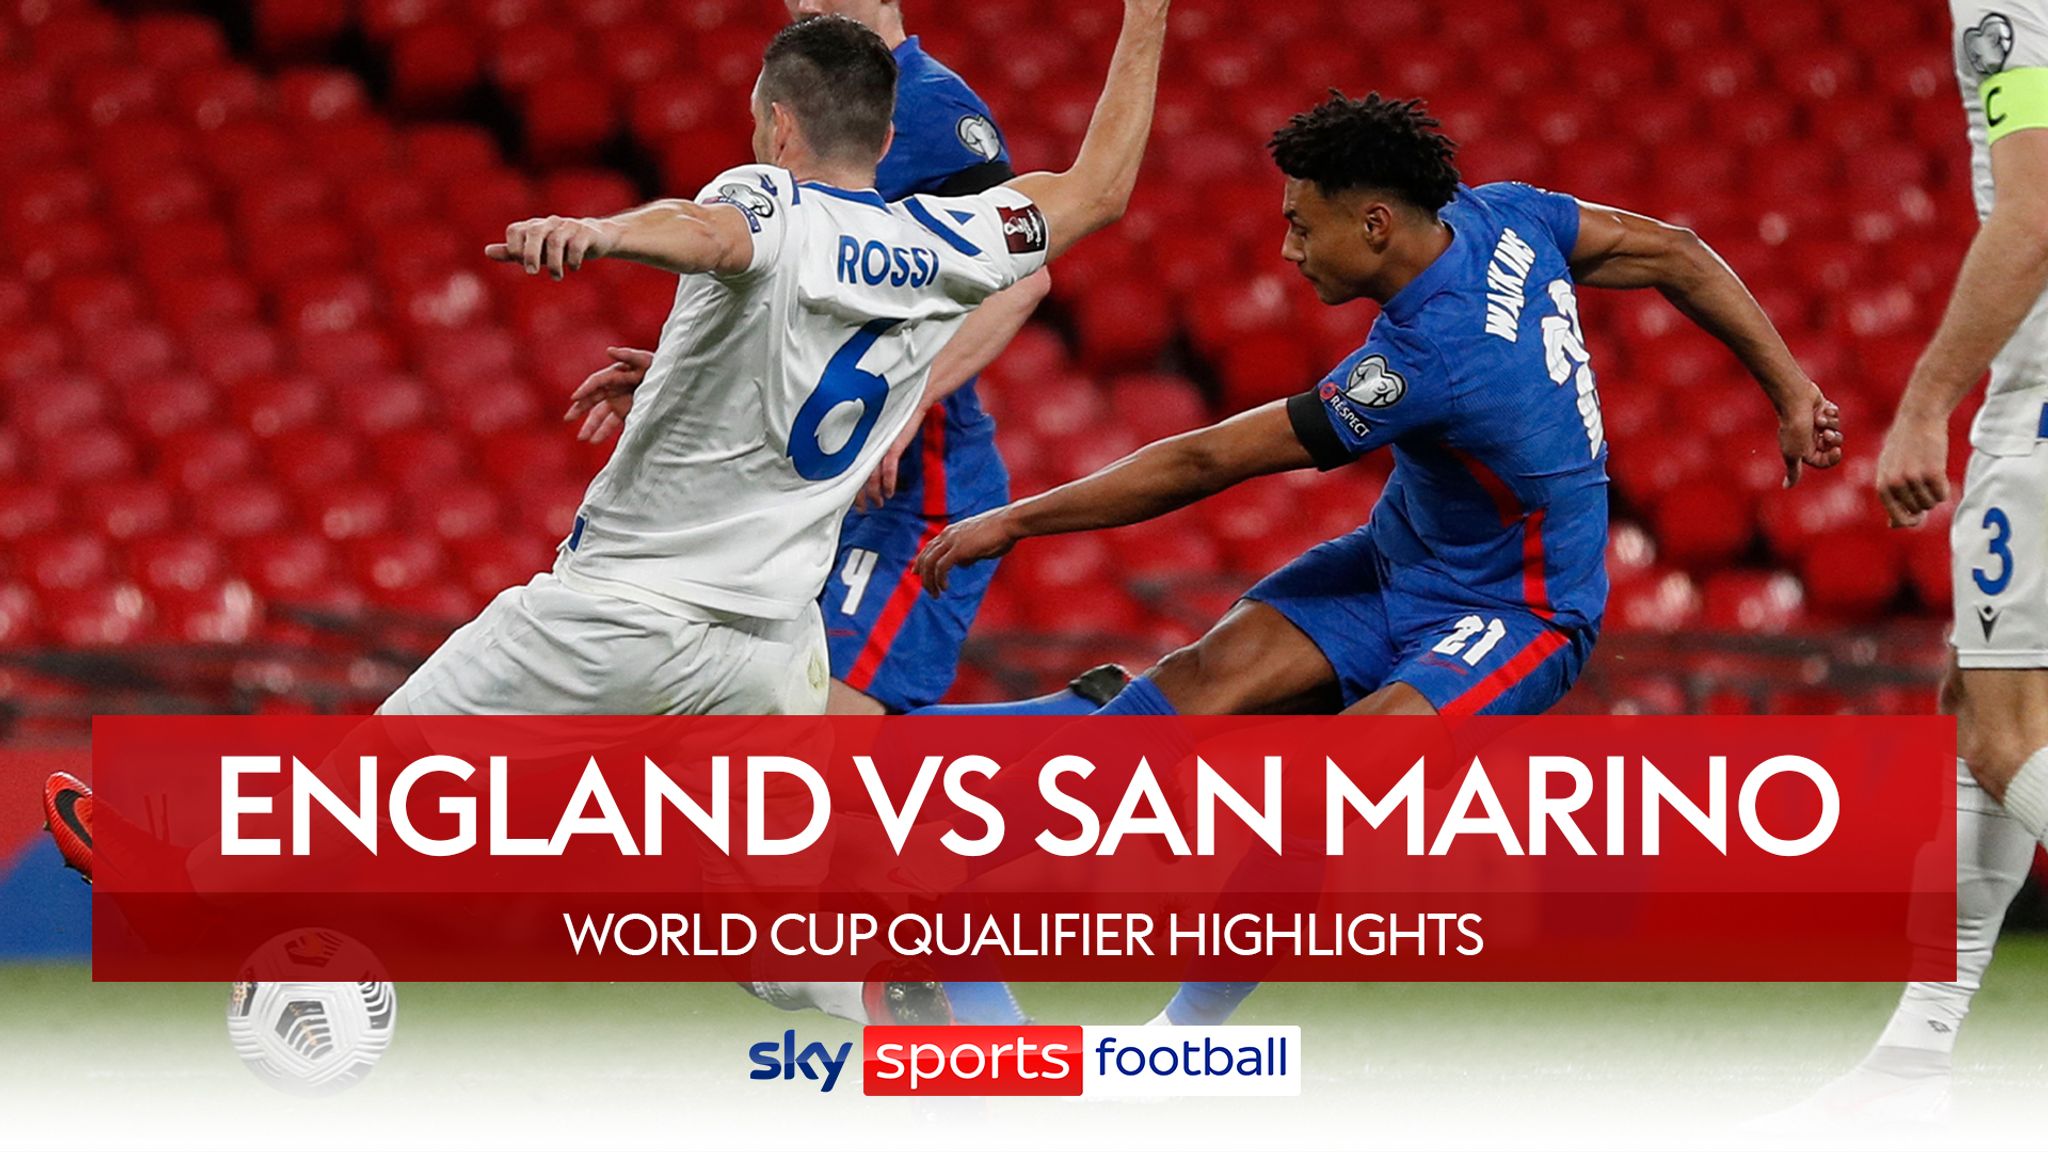 England 5 - 0 S Marino - Match Report & Highlights